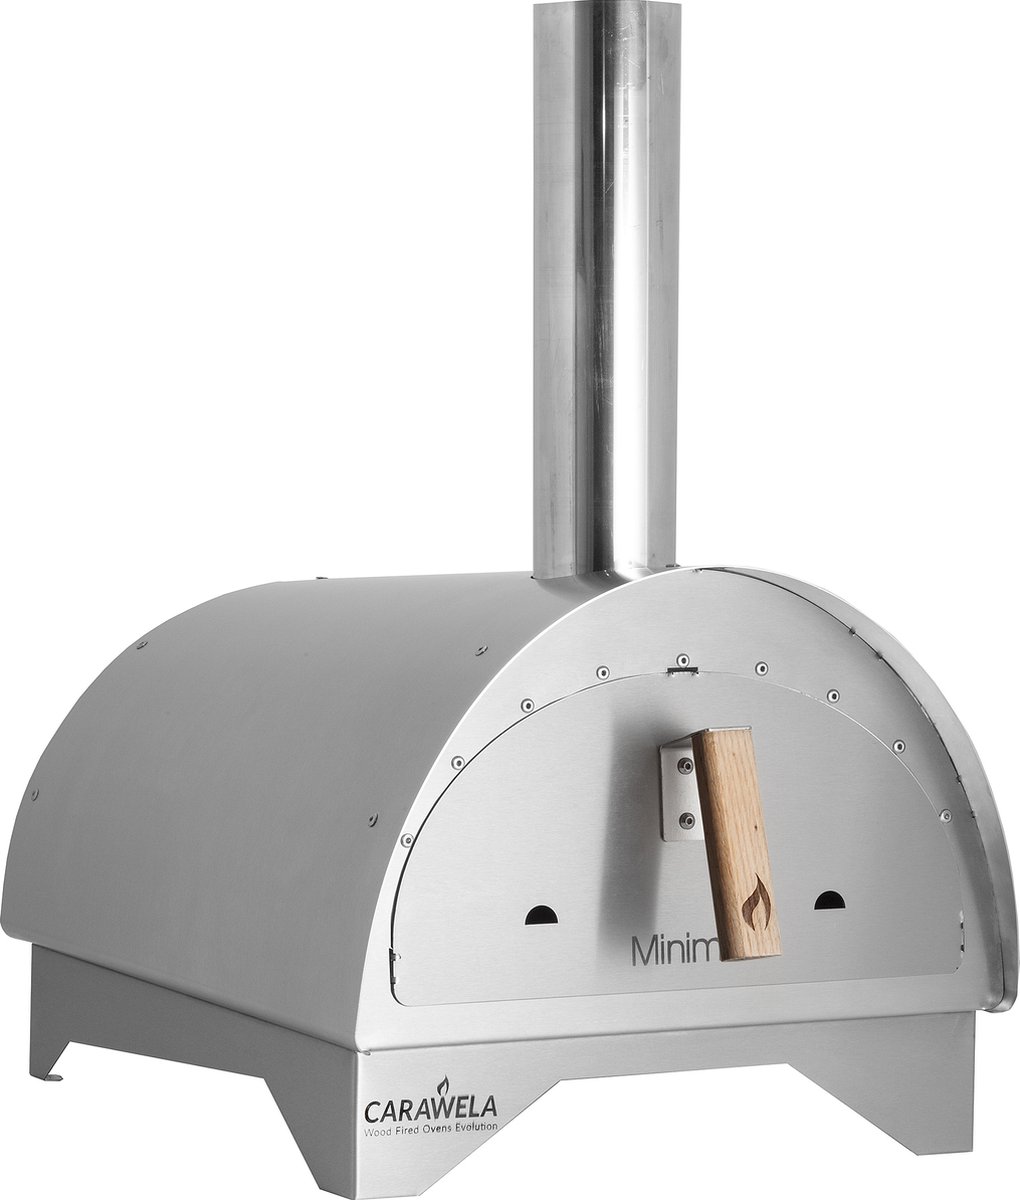 Carawela Minimo pizza oven hout gestookt